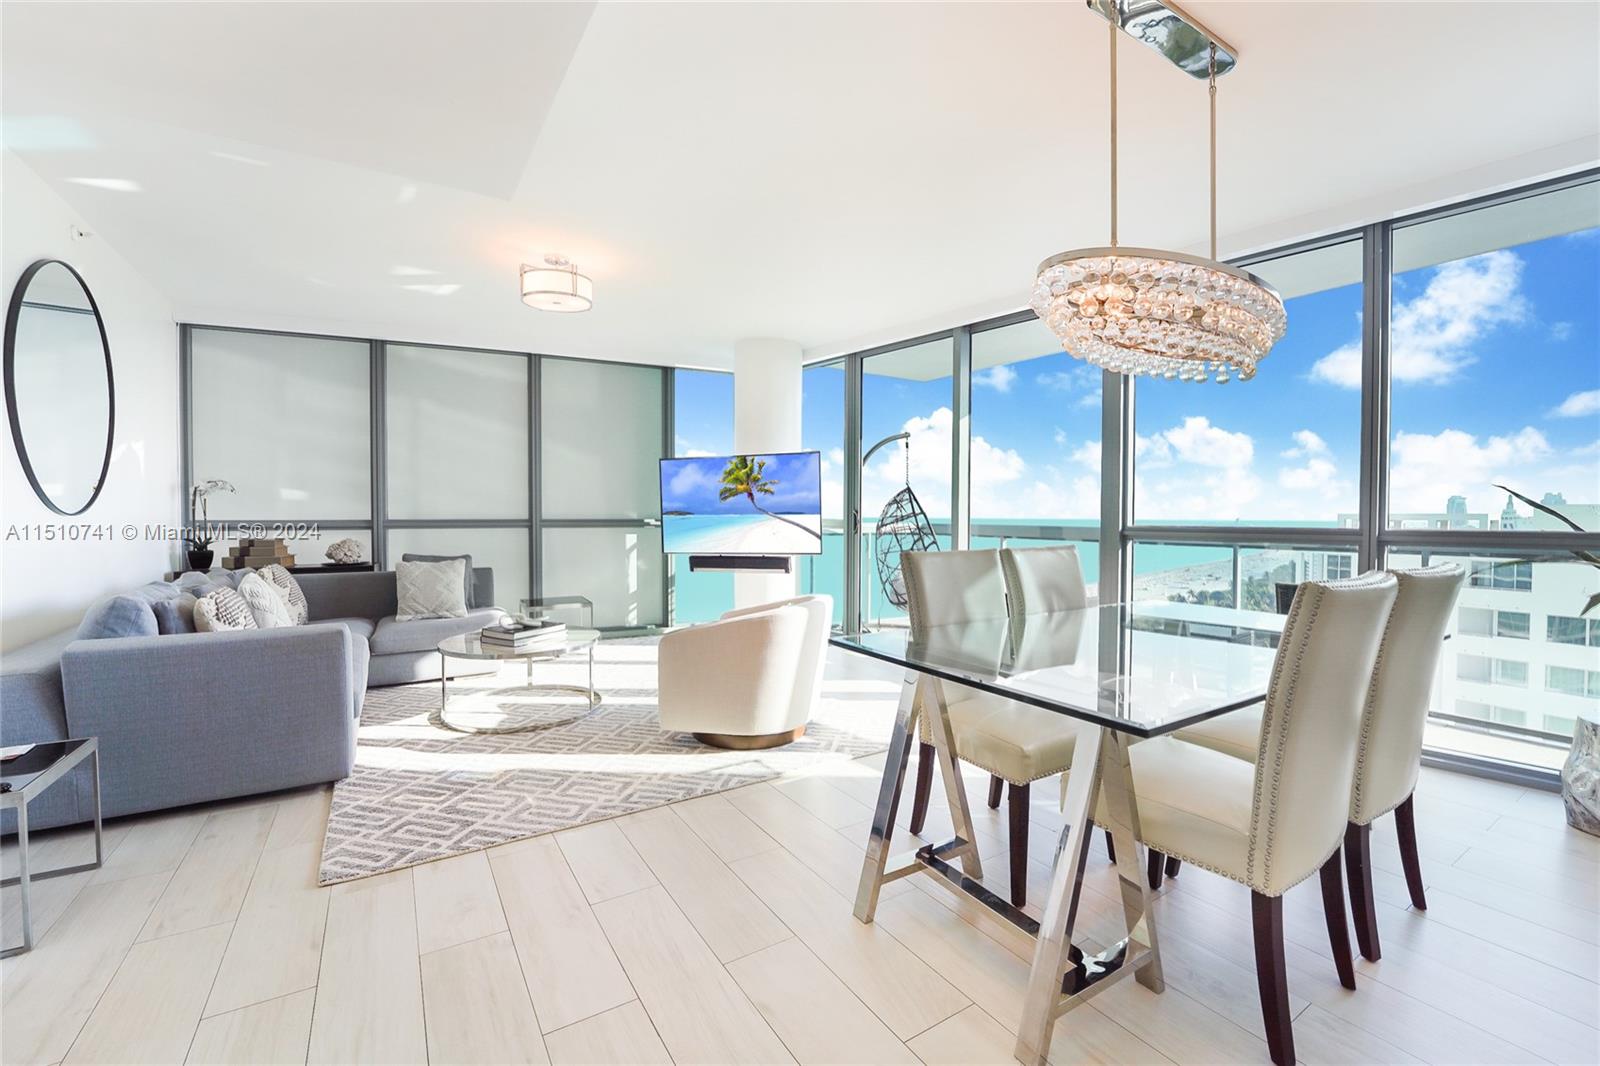 Rental Property at 101 20th St 2604, Miami Beach, Miami-Dade County, Florida - Bedrooms: 2 
Bathrooms: 2  - $25,000 MO.